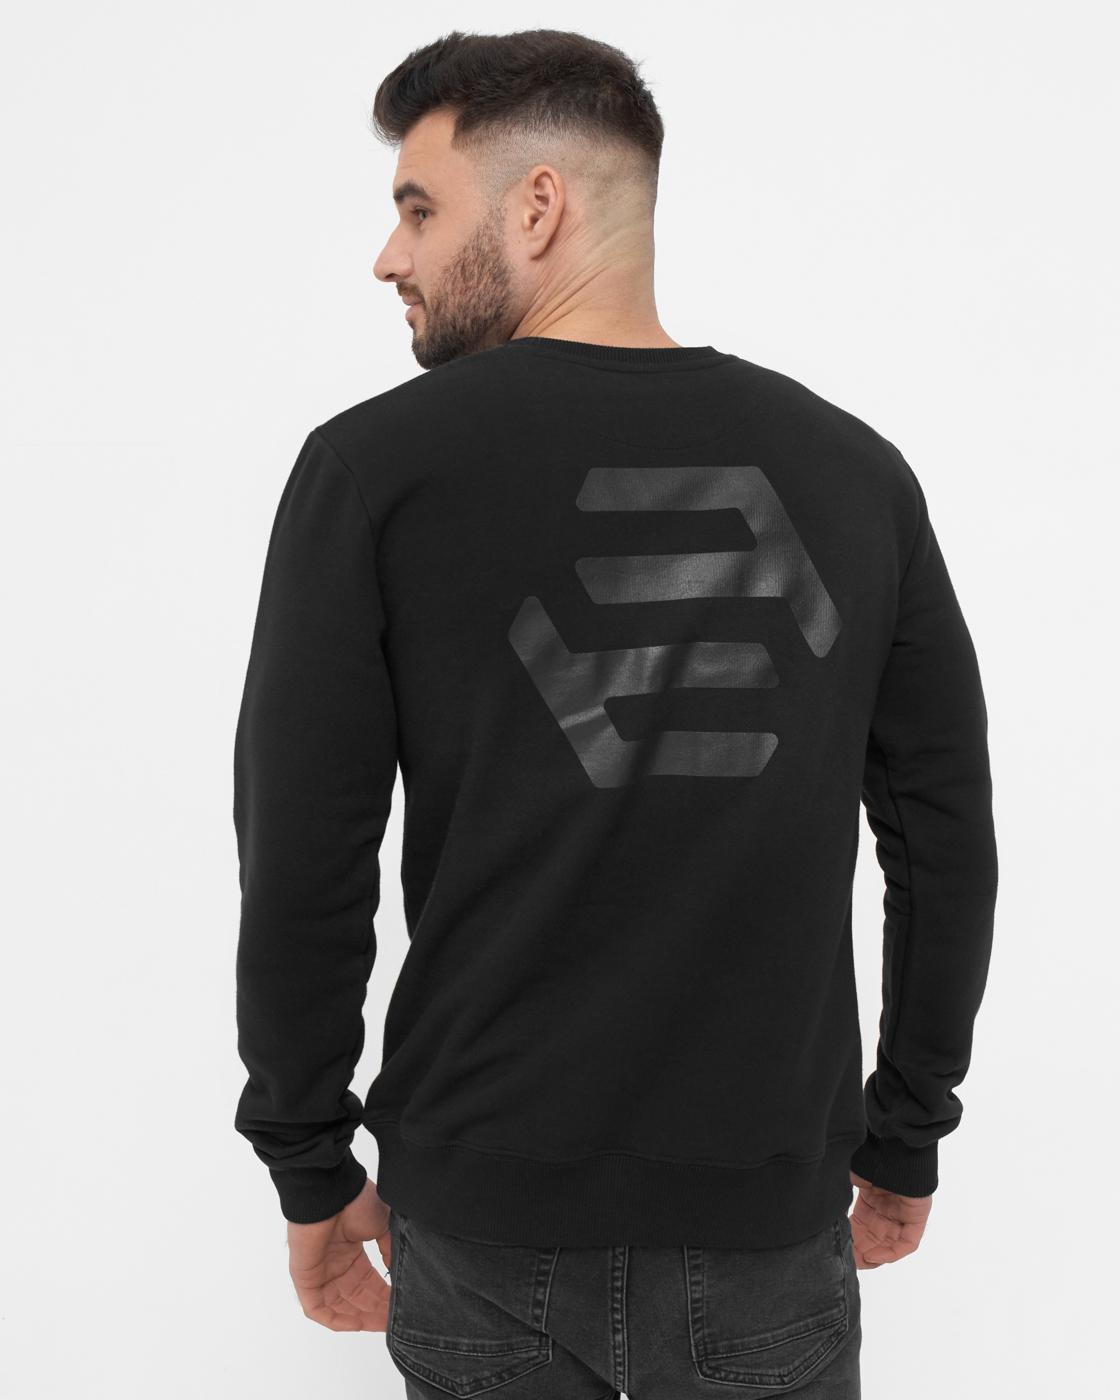 Sweatshirt SOFTFLIX black L